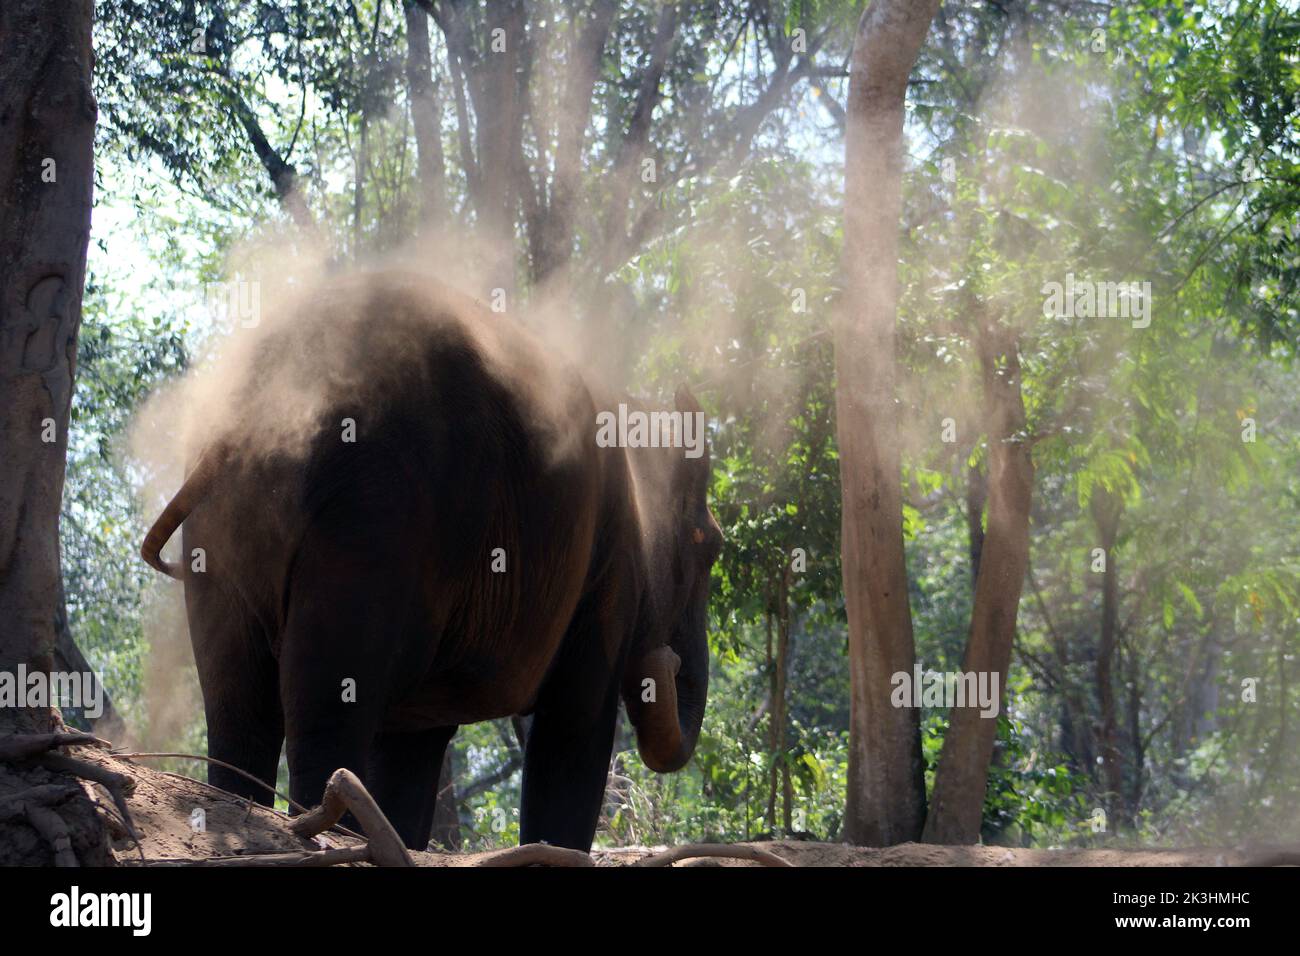 single Indian elephant (Elephas maximus indicus) near Kanchanaburi, Thailand taking a dust bath Stock Photo